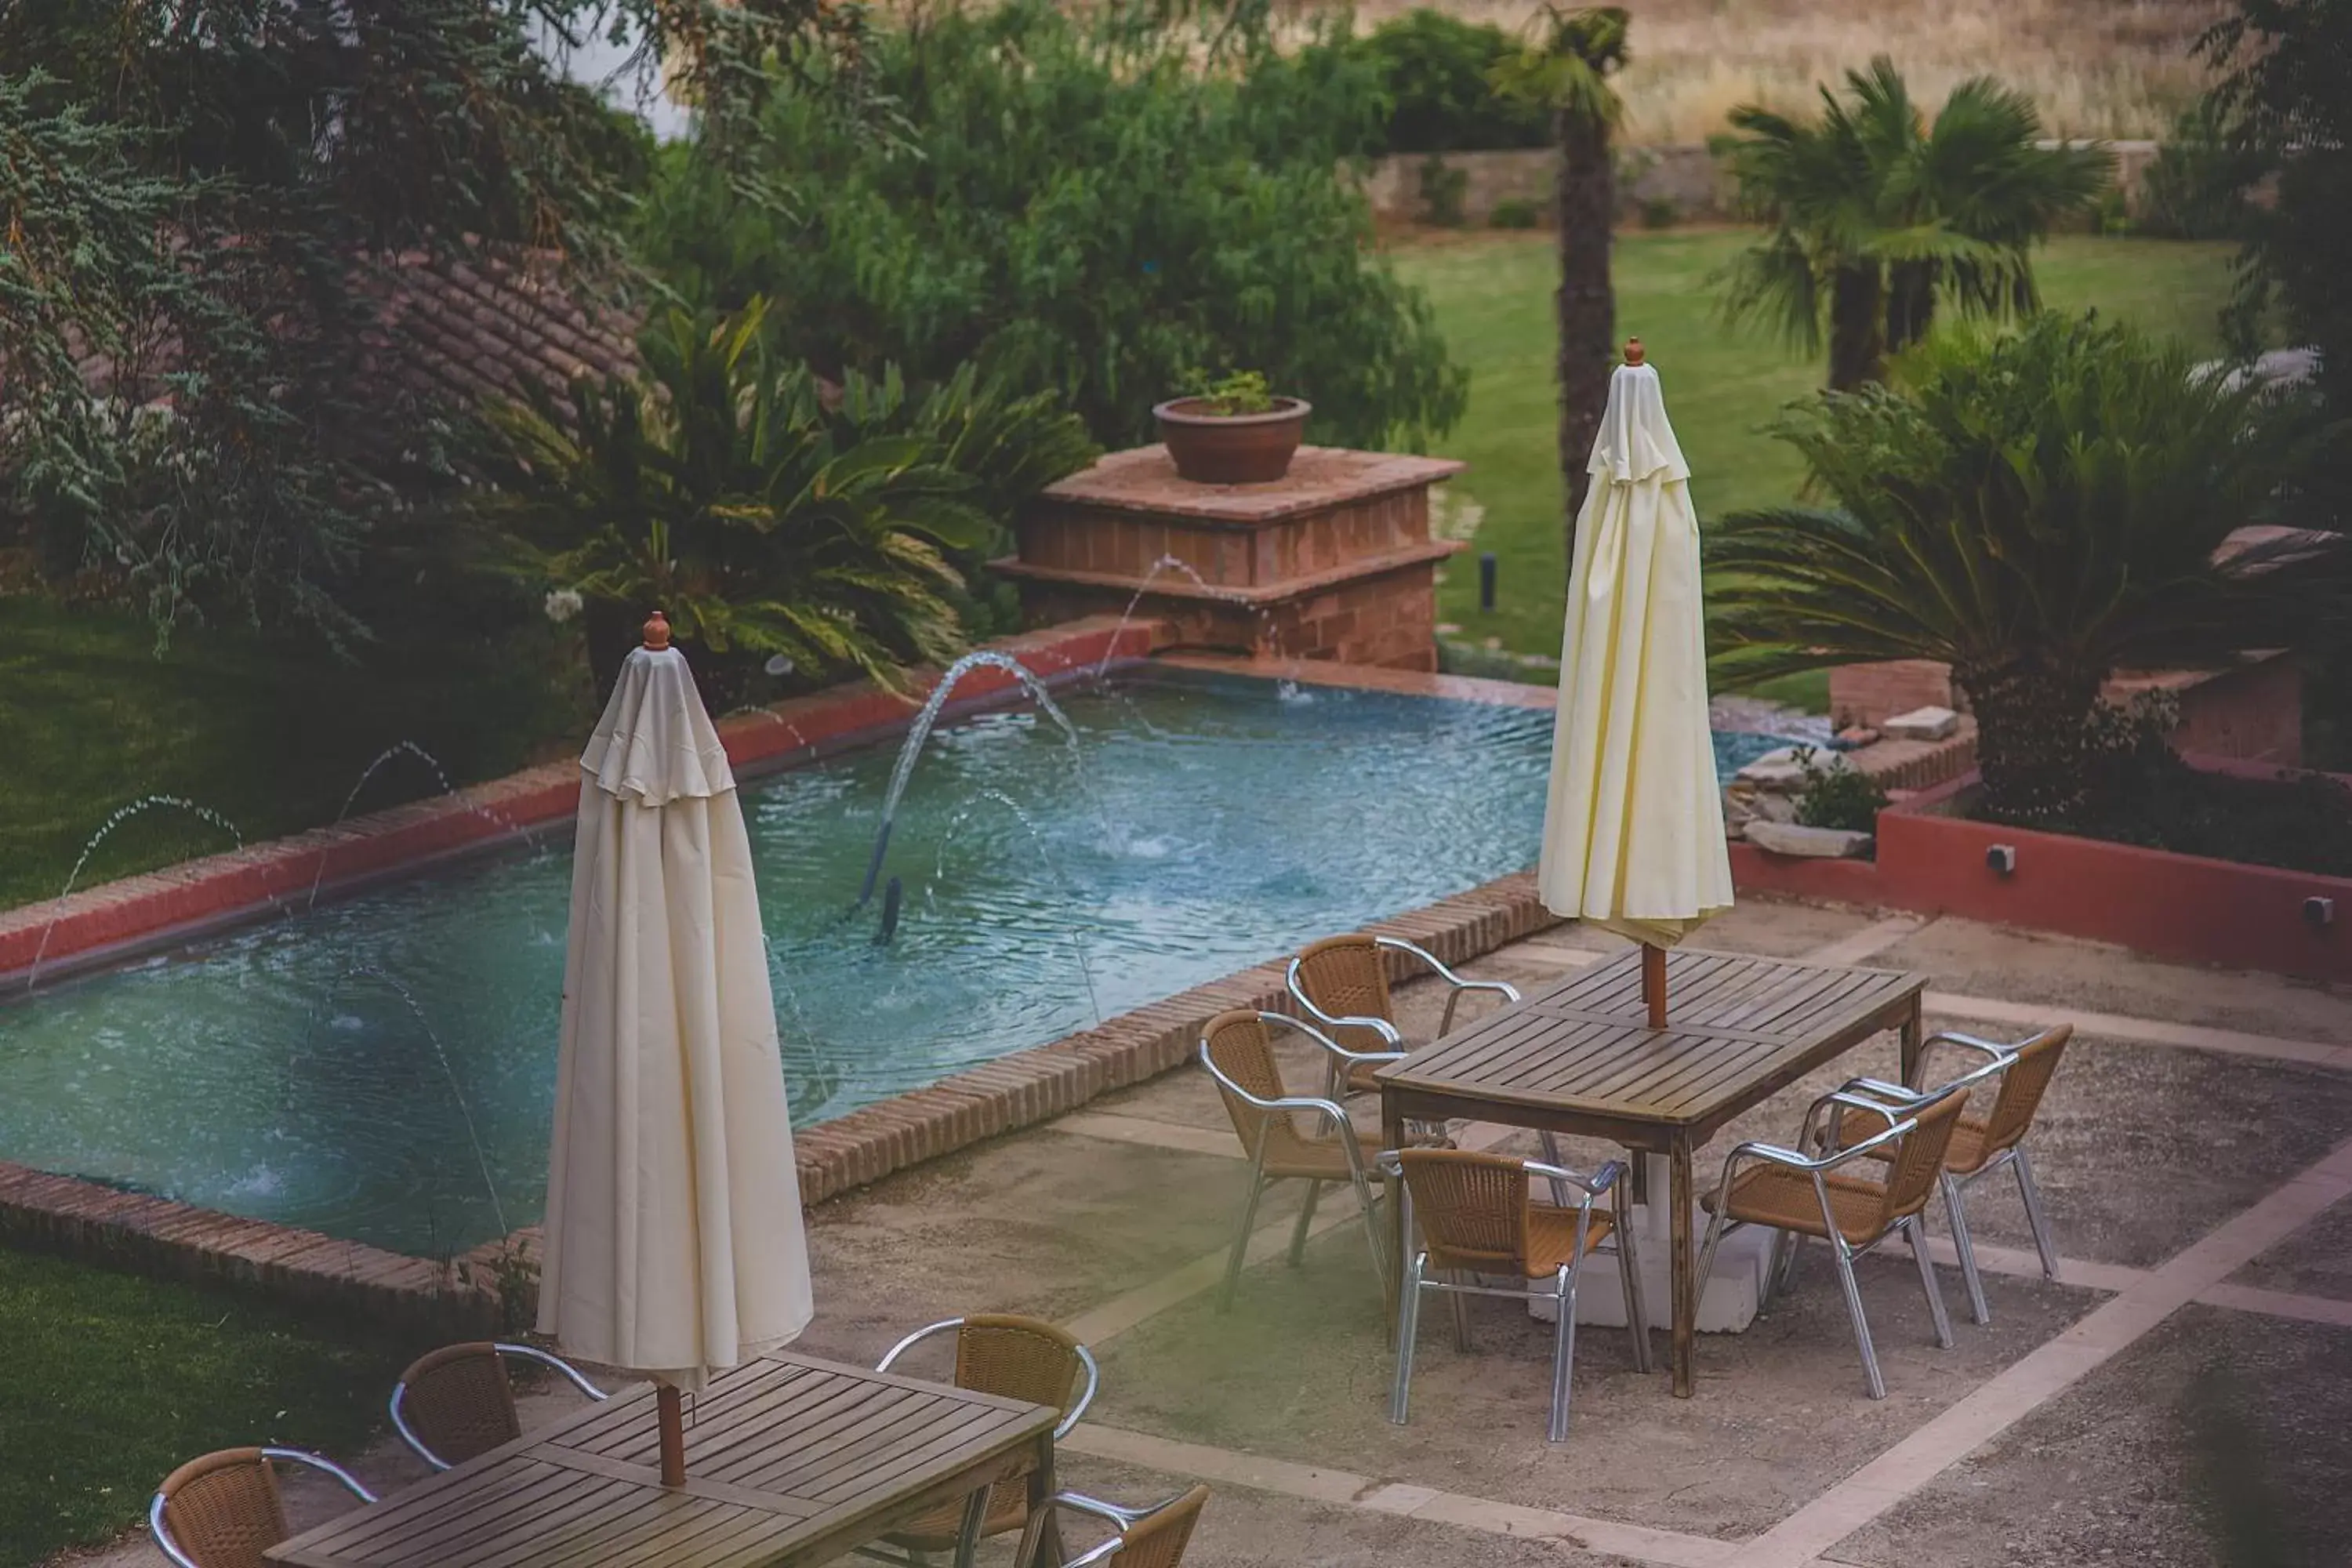 Off site, Pool View in Hotel Bodega El Juncal